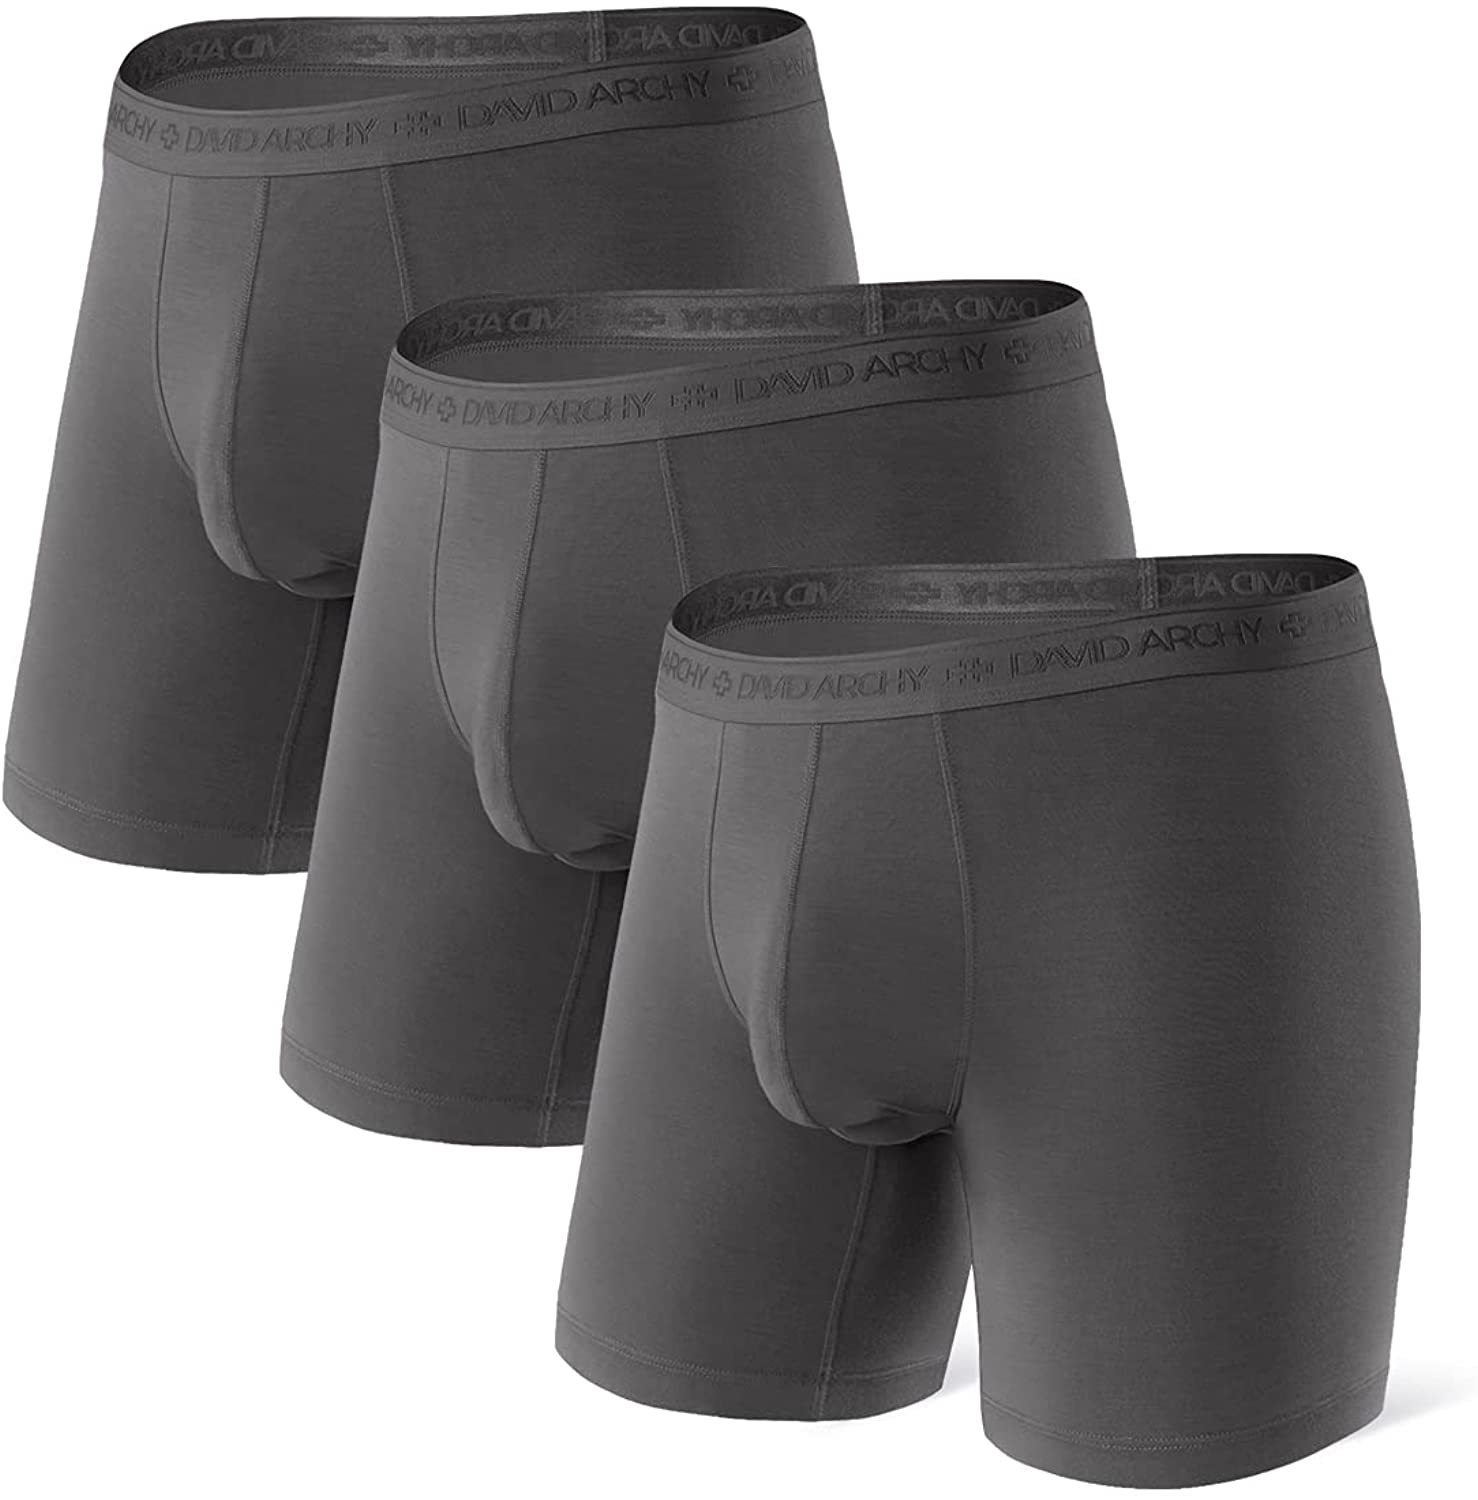 Separatec Men's Underwear 3 Pack Basic Micro Modal Soft Breathable